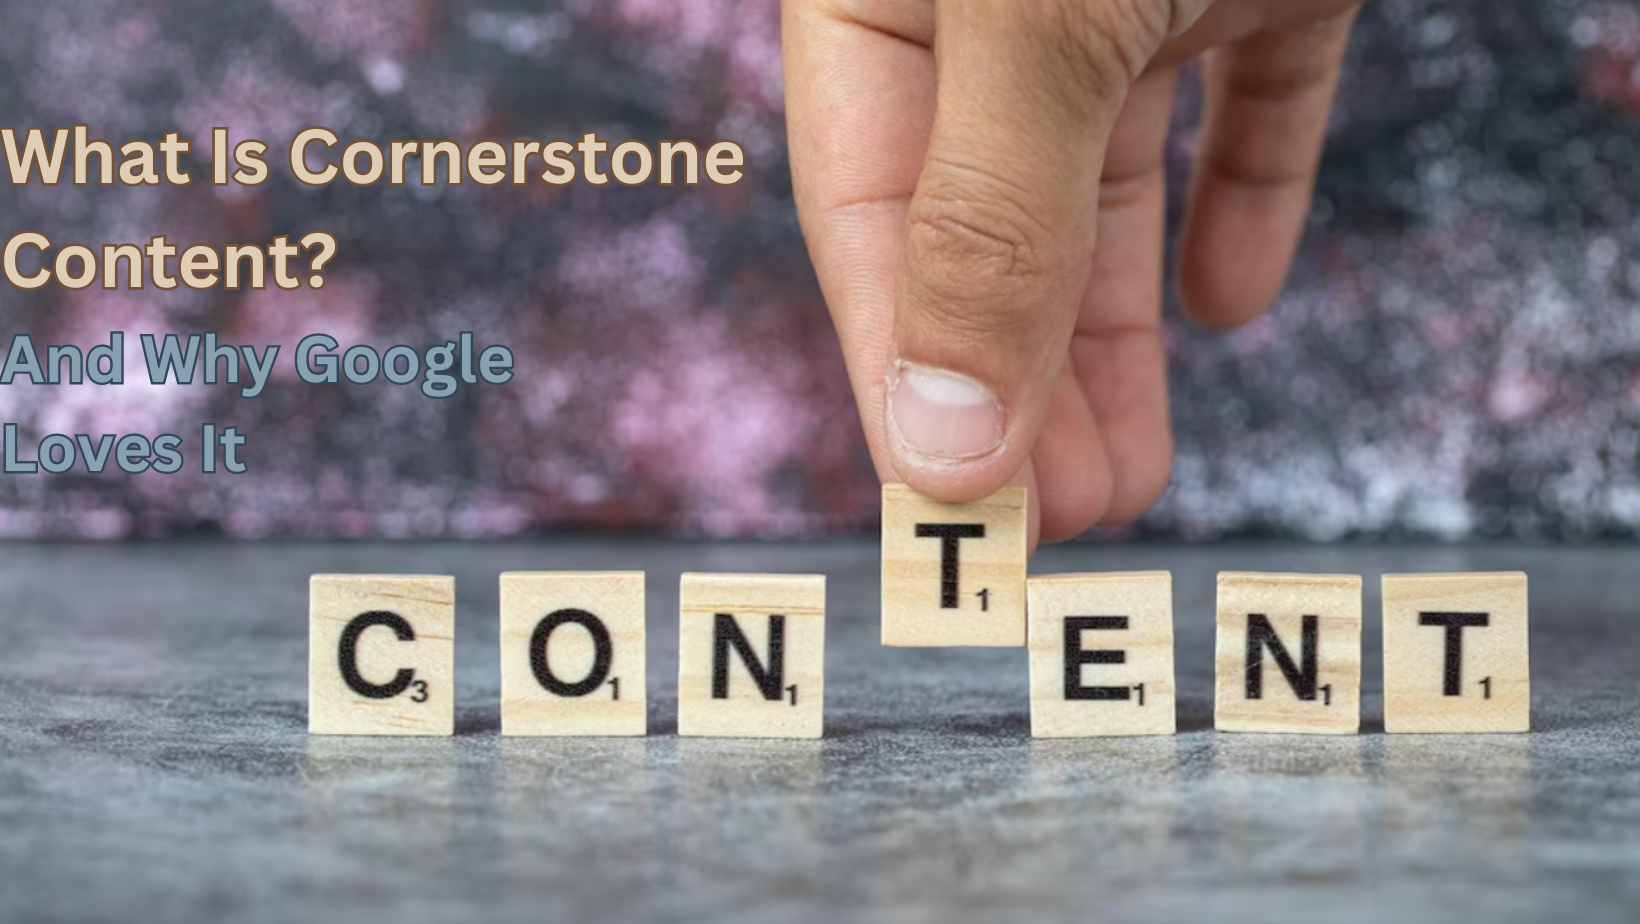 Cornerstone Content